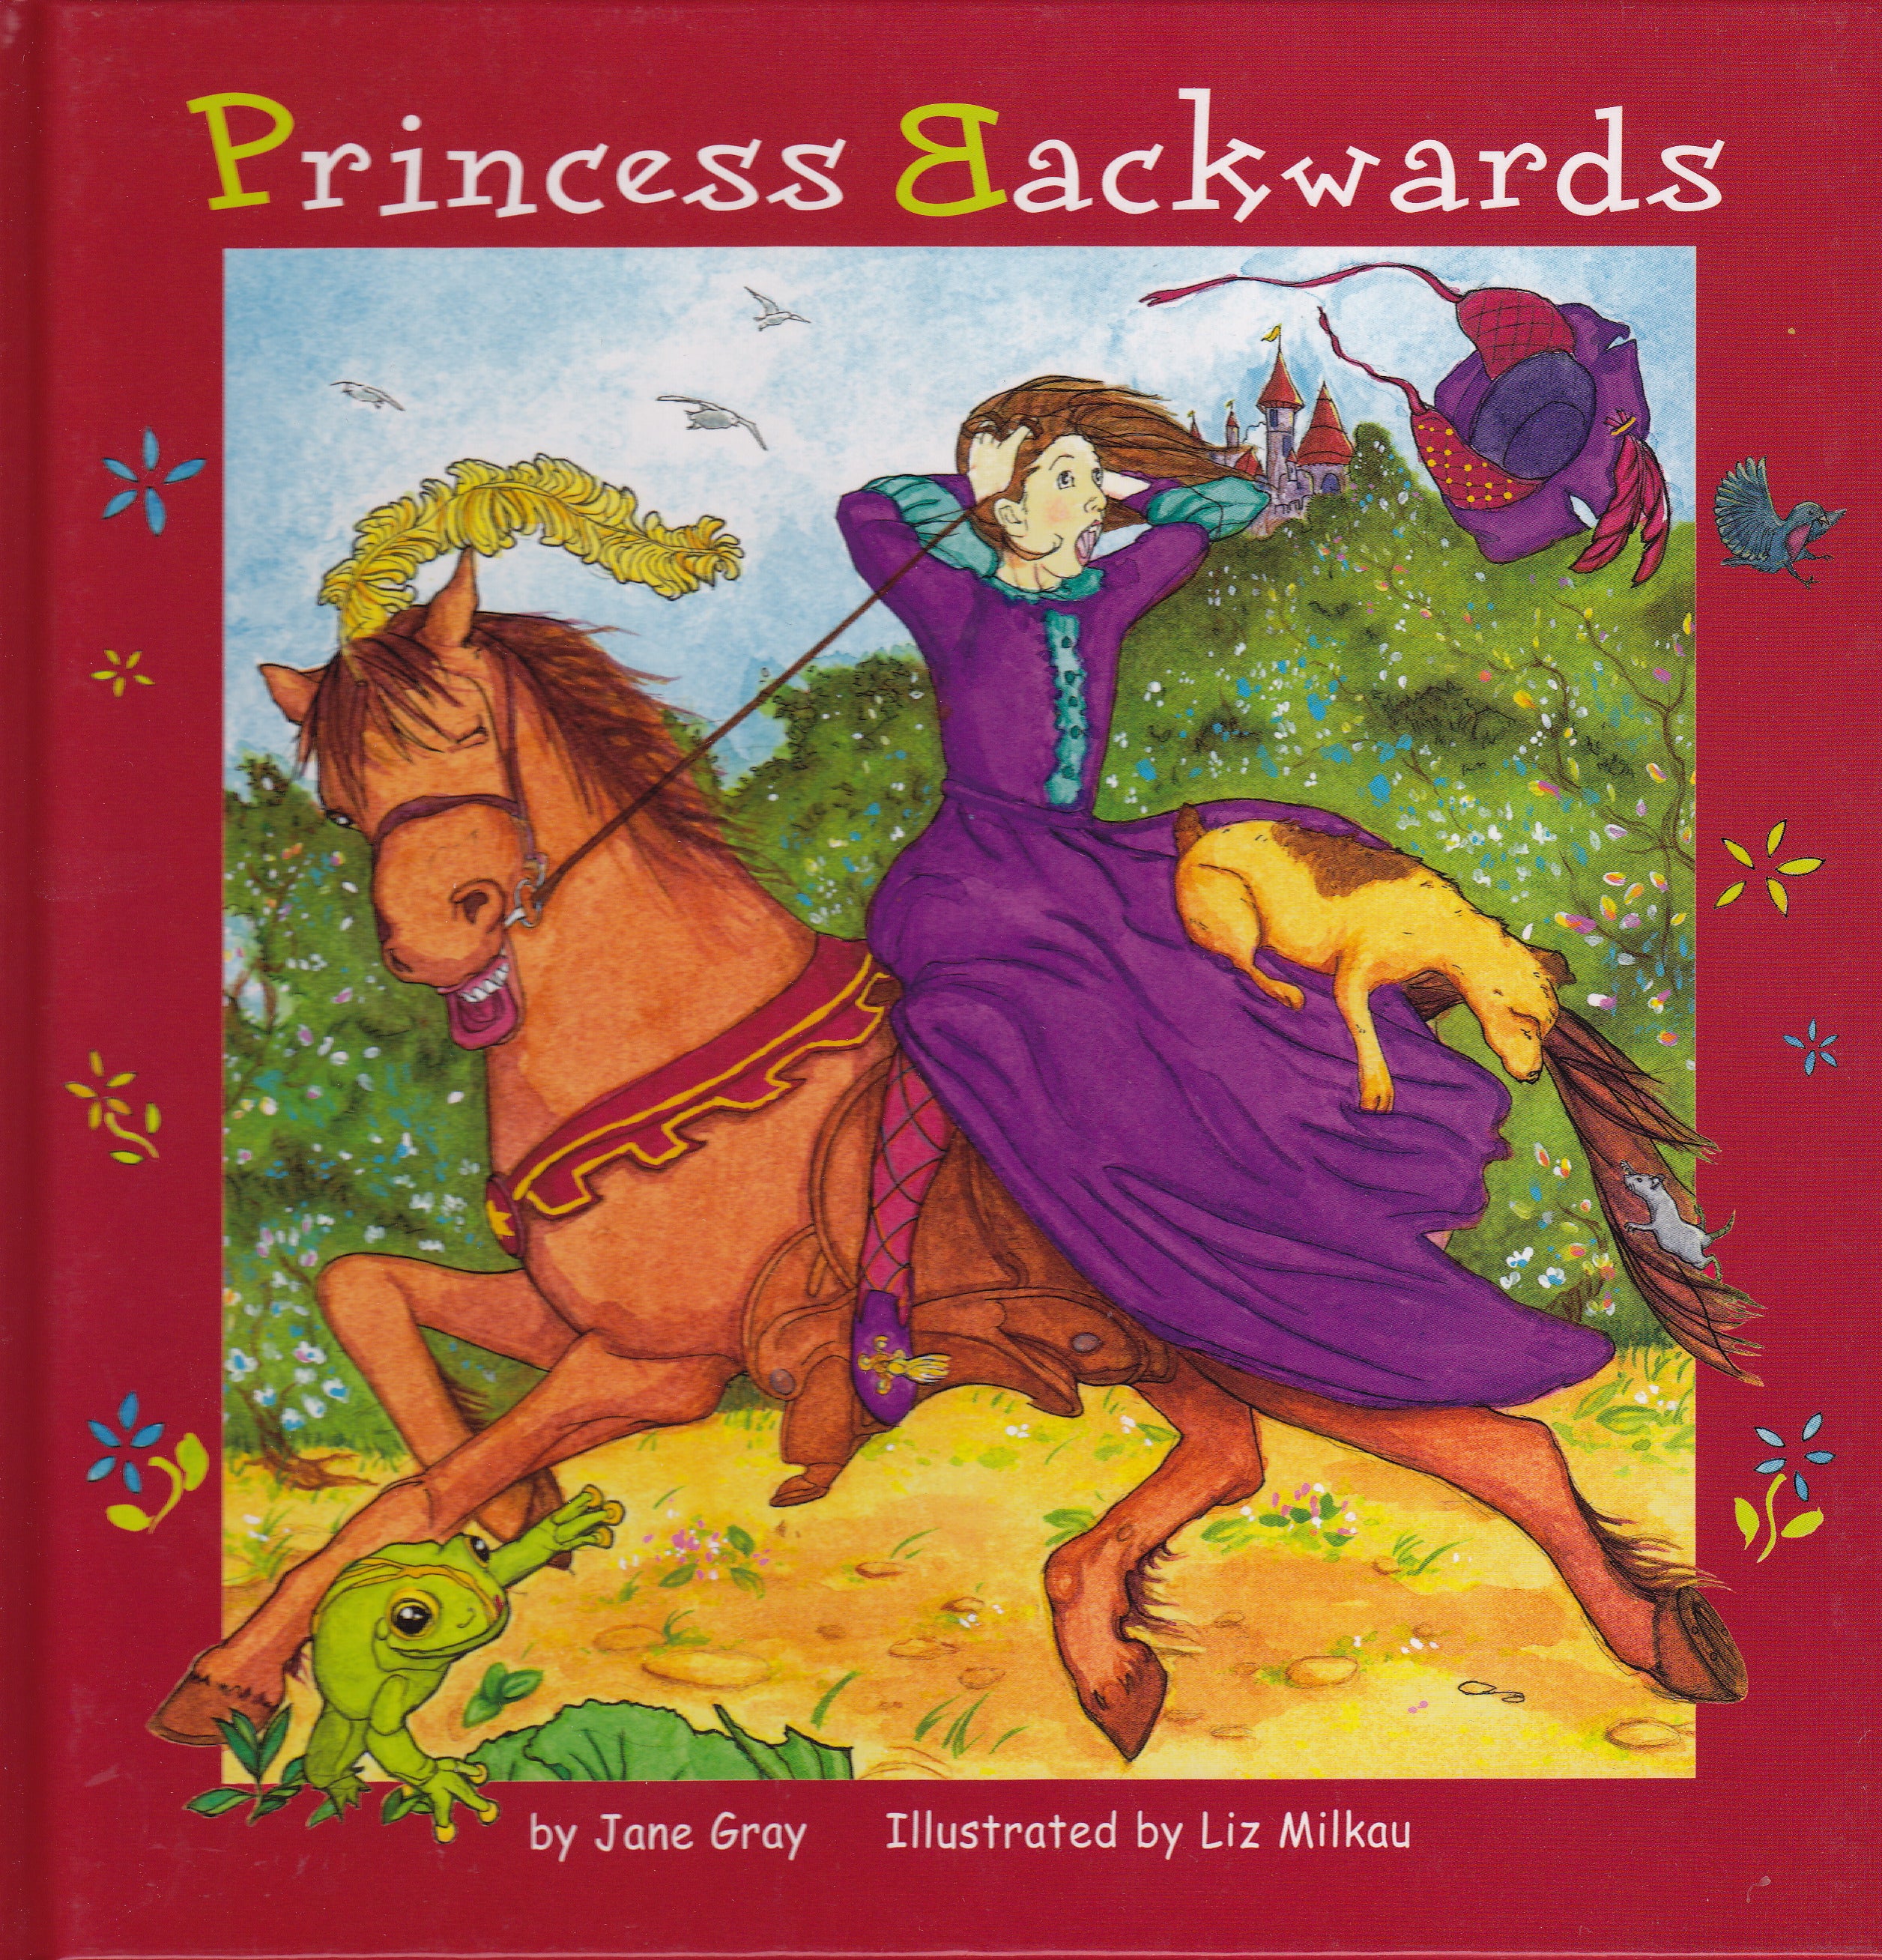 Princess Backwards